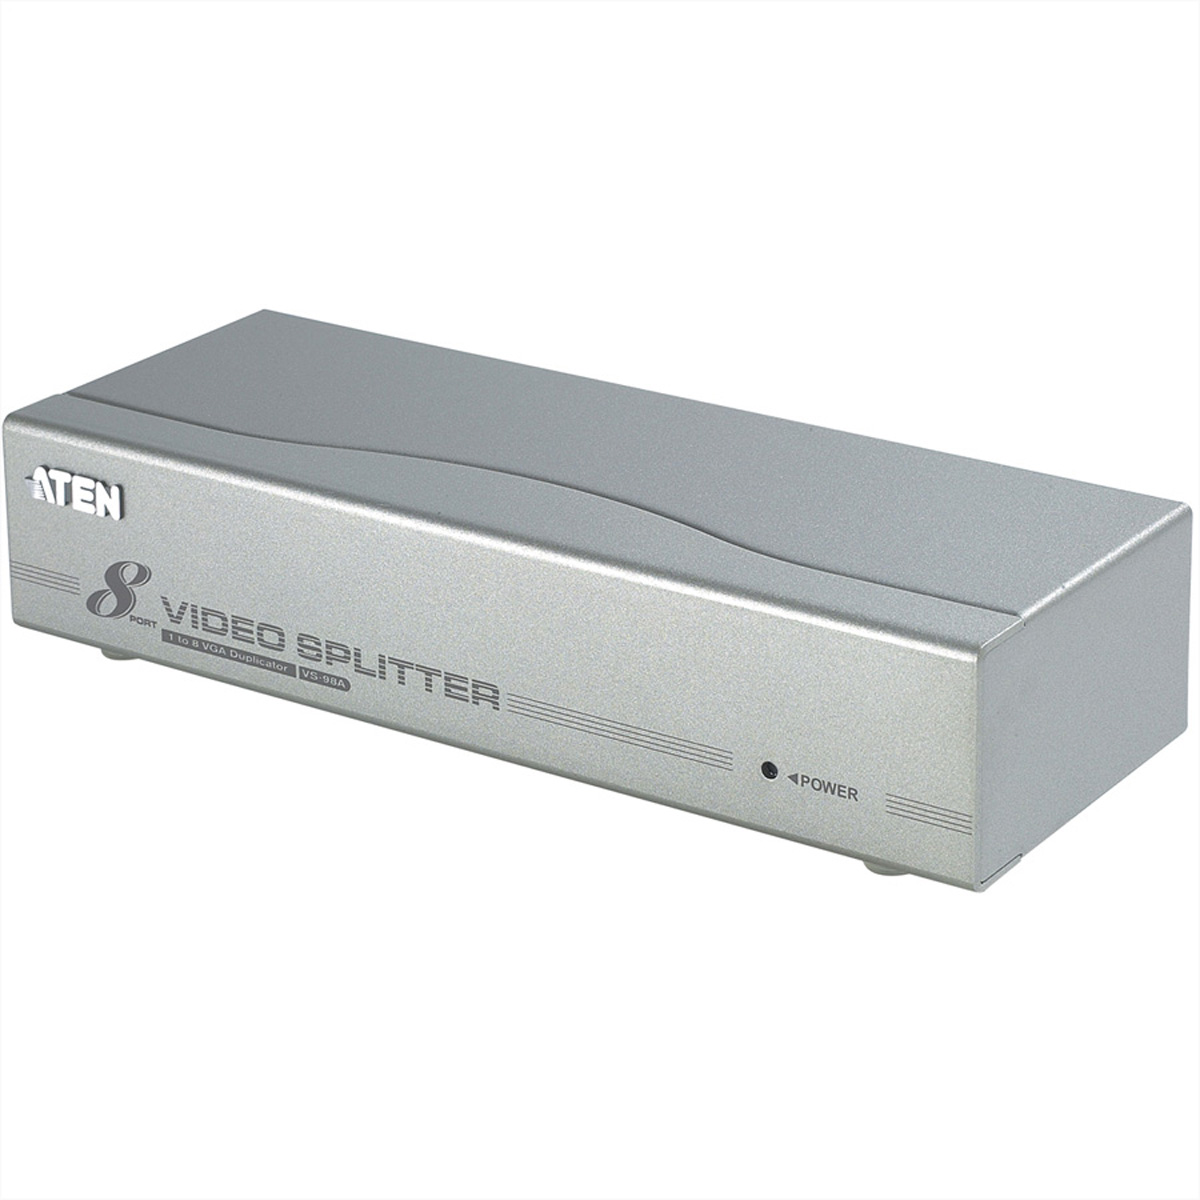 ATEN VS98A 8fach 300MHz, Video-Splitter, VGA VGA-Video-Splitter